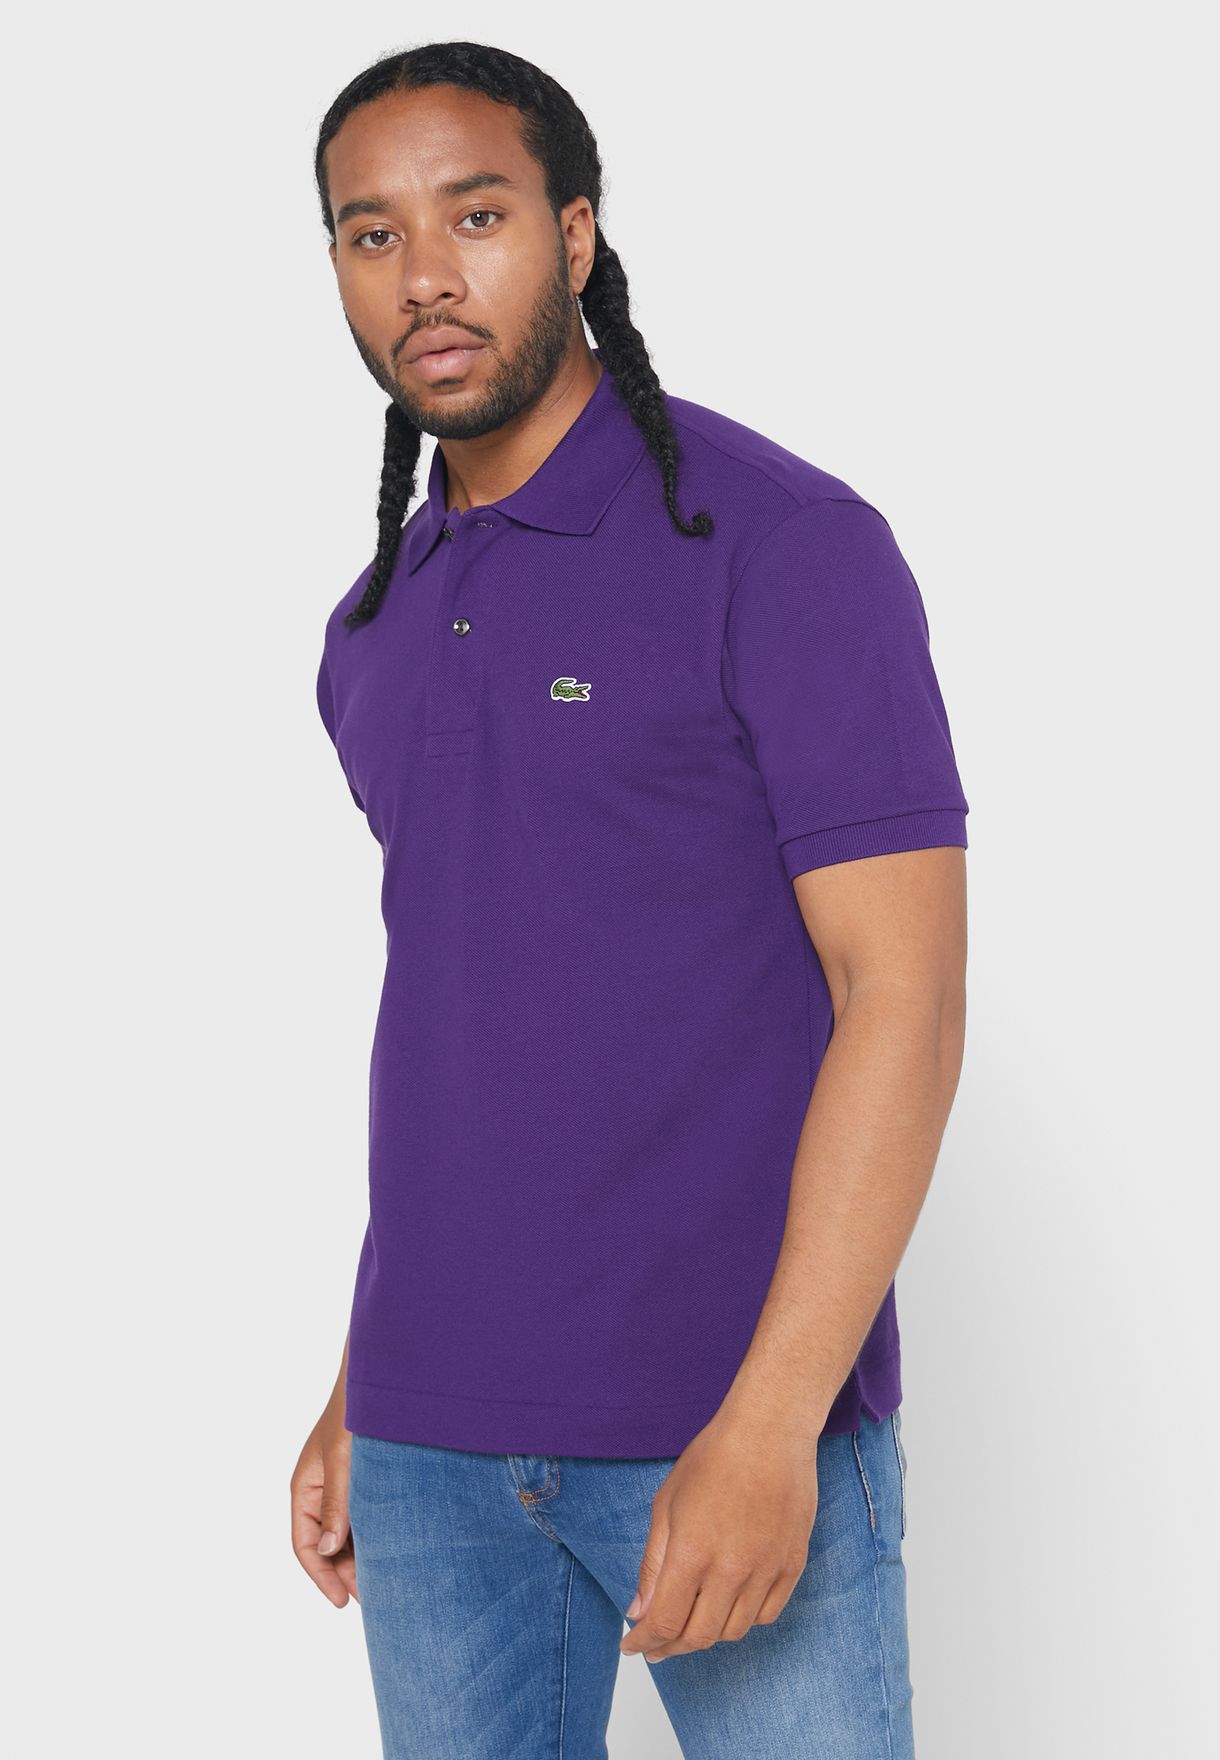 lacoste purple t shirt